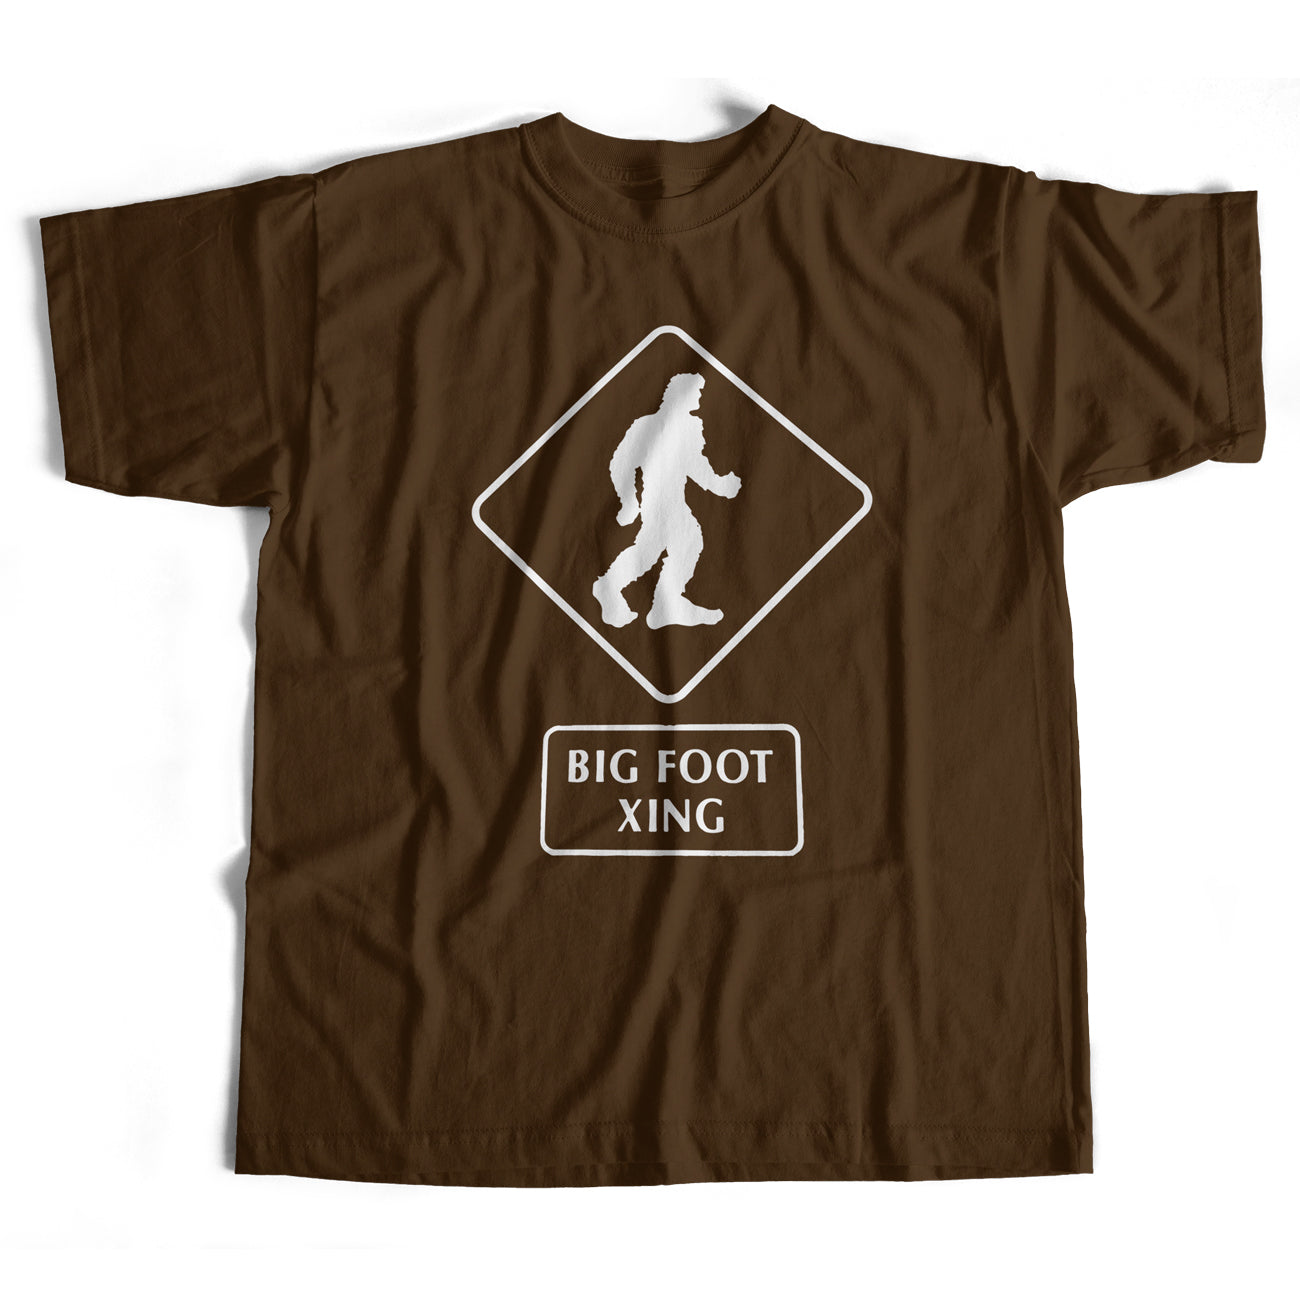 Old Skool Hooligans Bigfoot T Shirt - Crossing Xing Sign Sasquatch